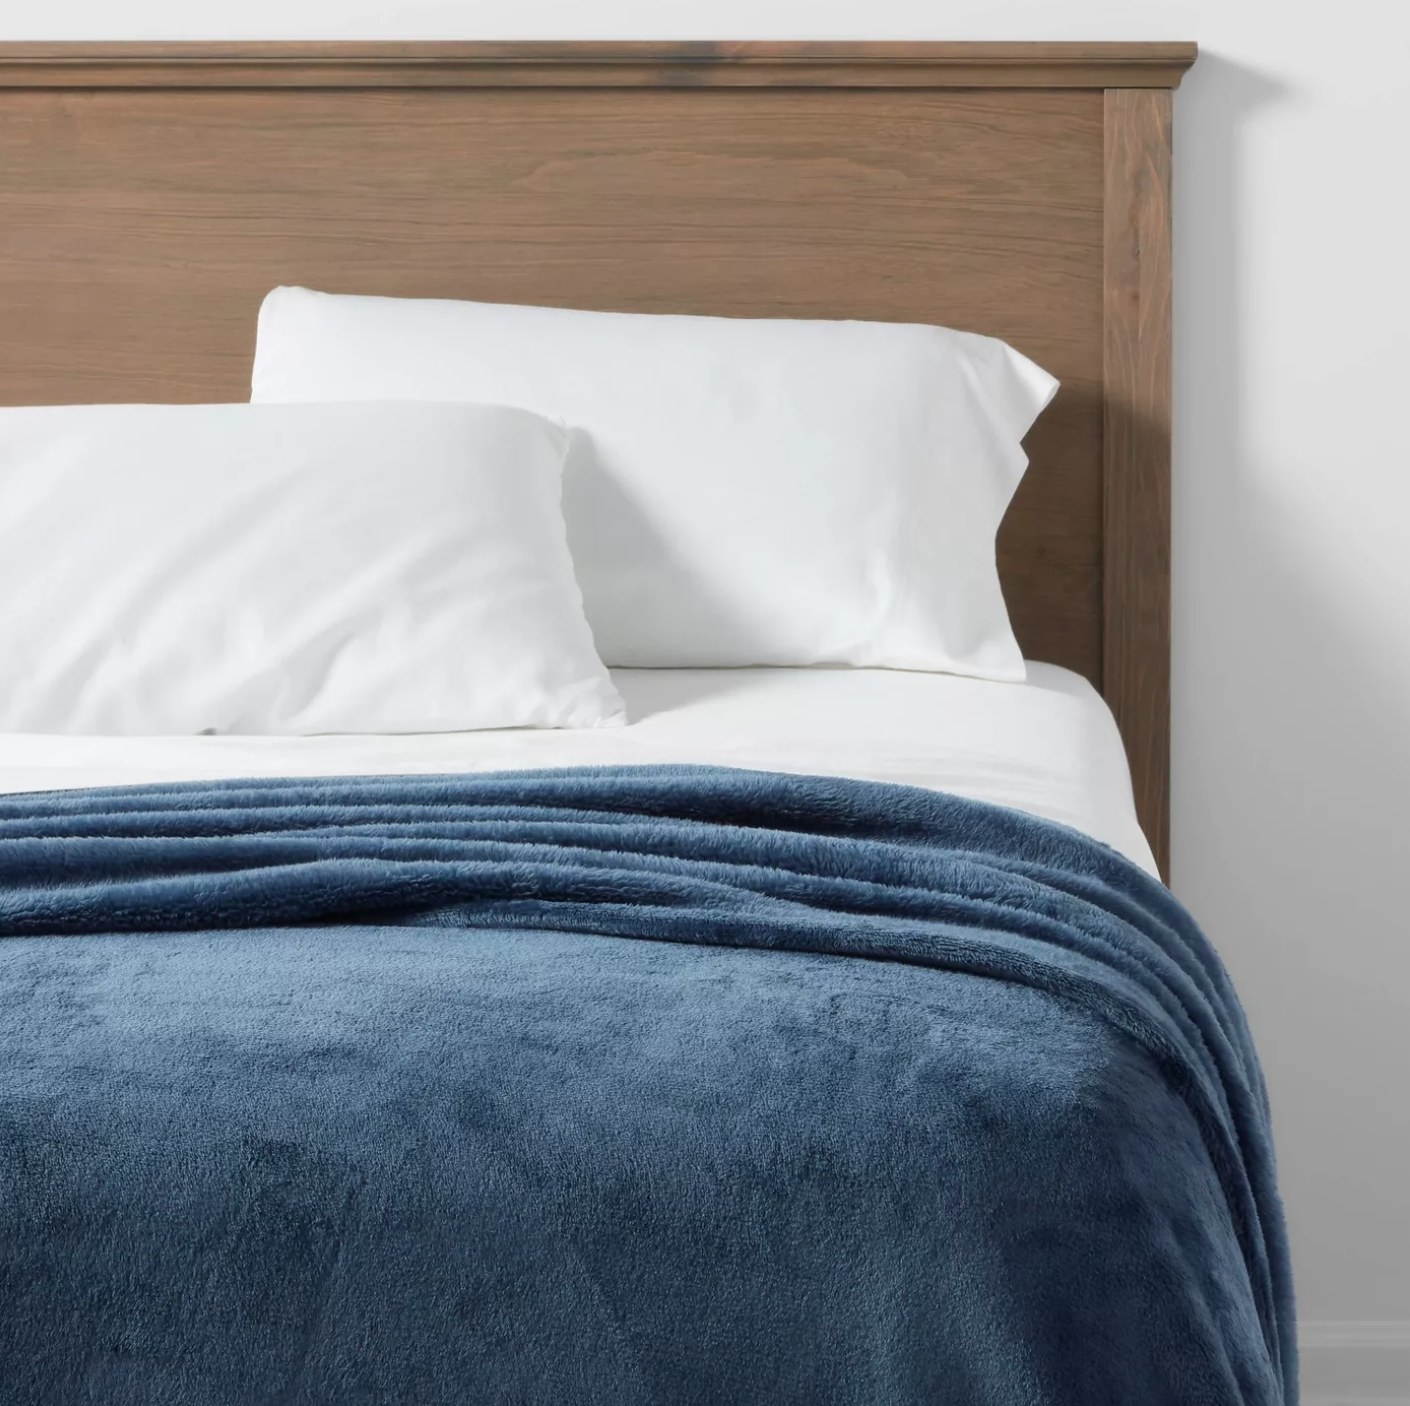 The microplush bed blanket in metallic blue